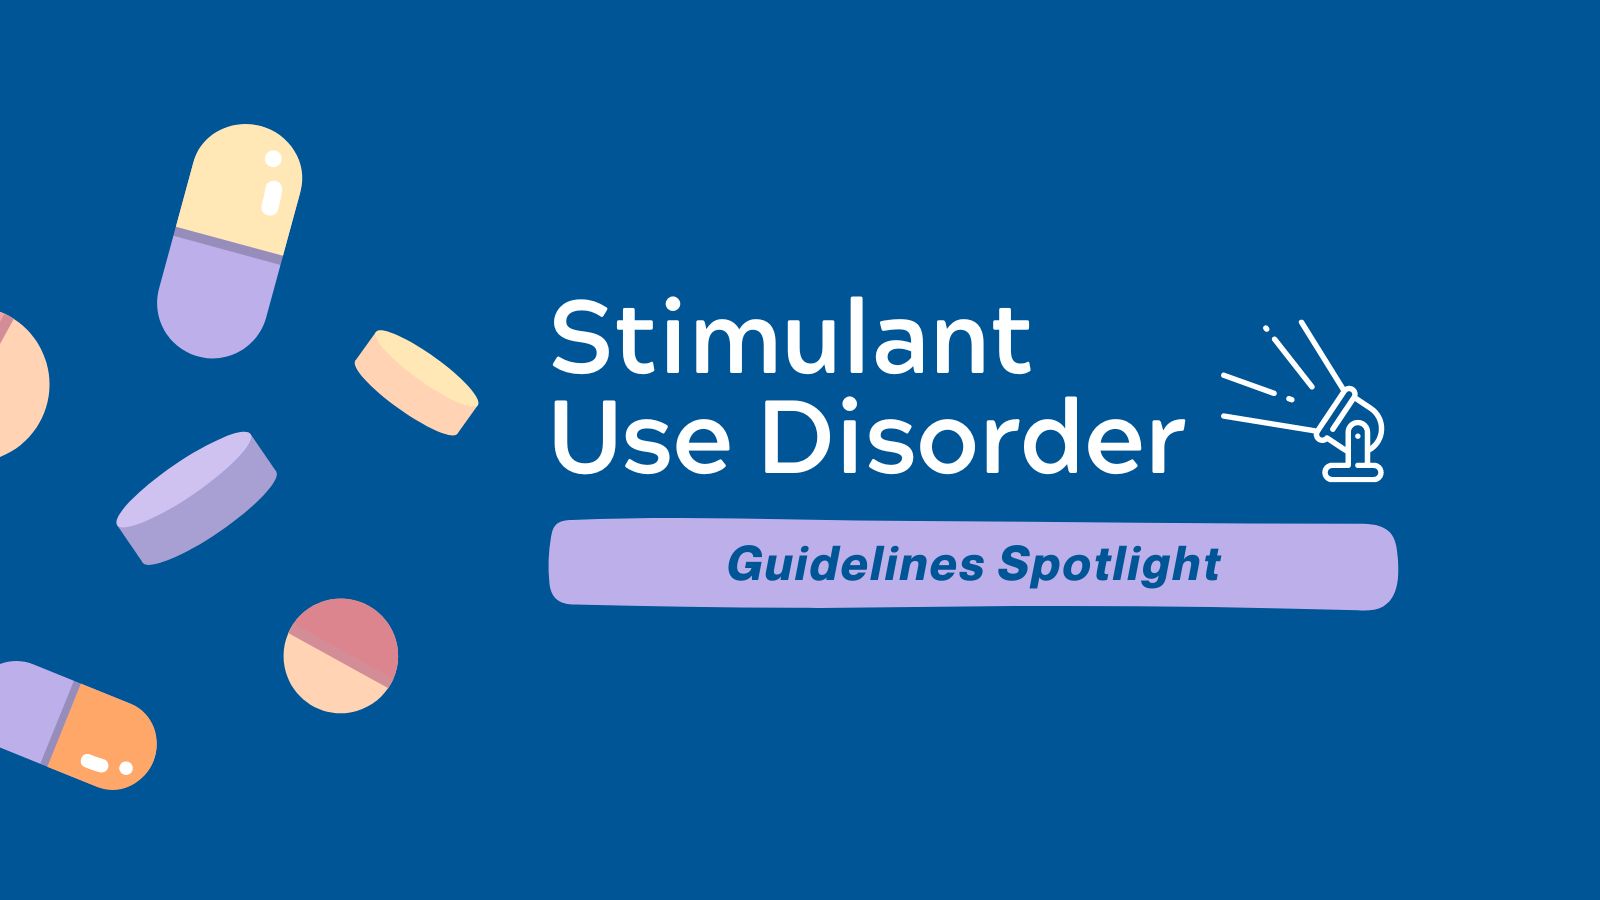 Guidelines Spotlight - Stimulant Use Disorder